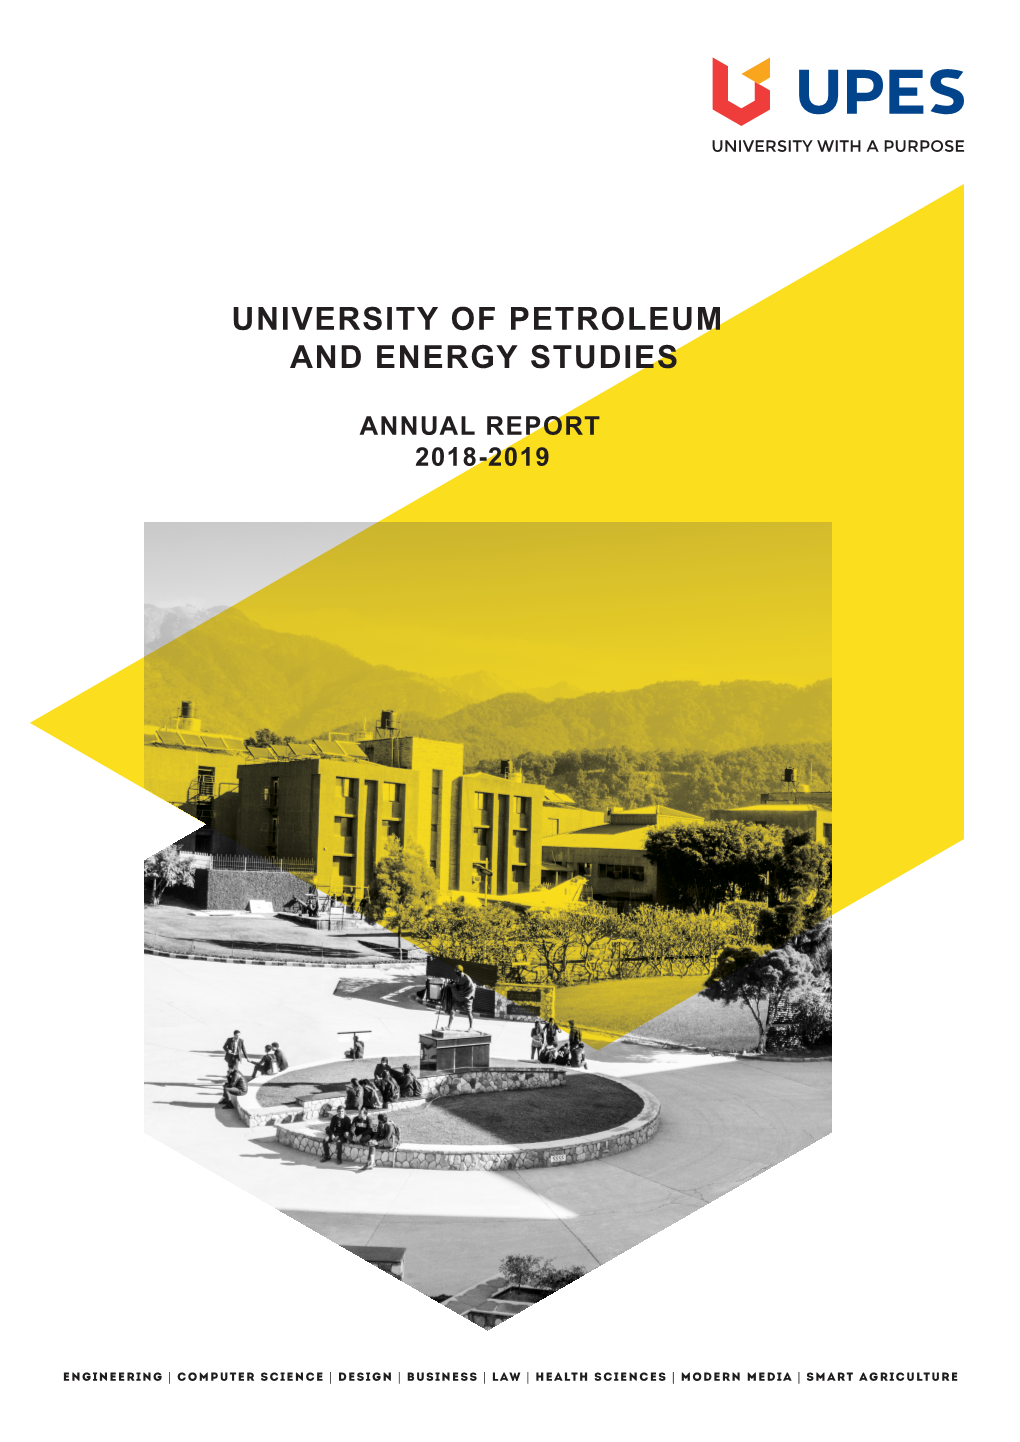 University of Petroleum & Energy Studies Vision